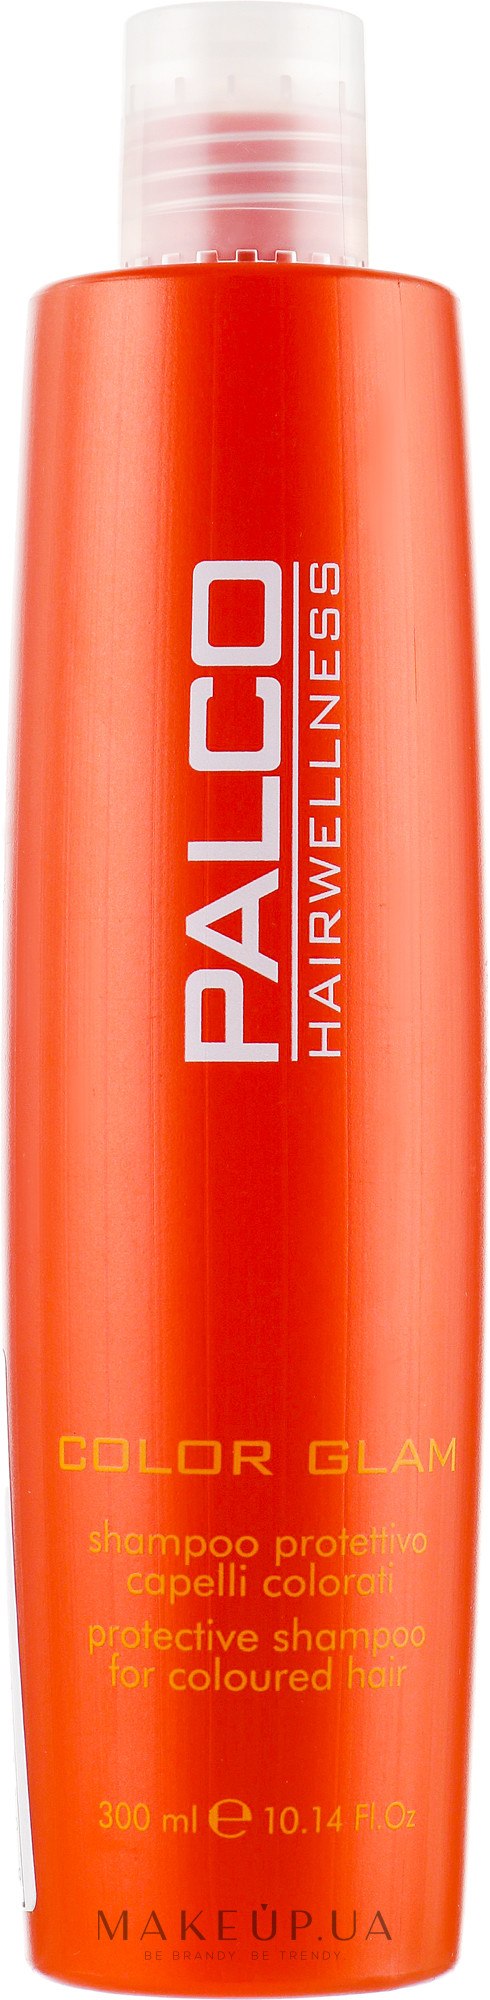 Шампунь для фарбованого волосся - Palco Professional Color Glem Shampoo — фото 300ml